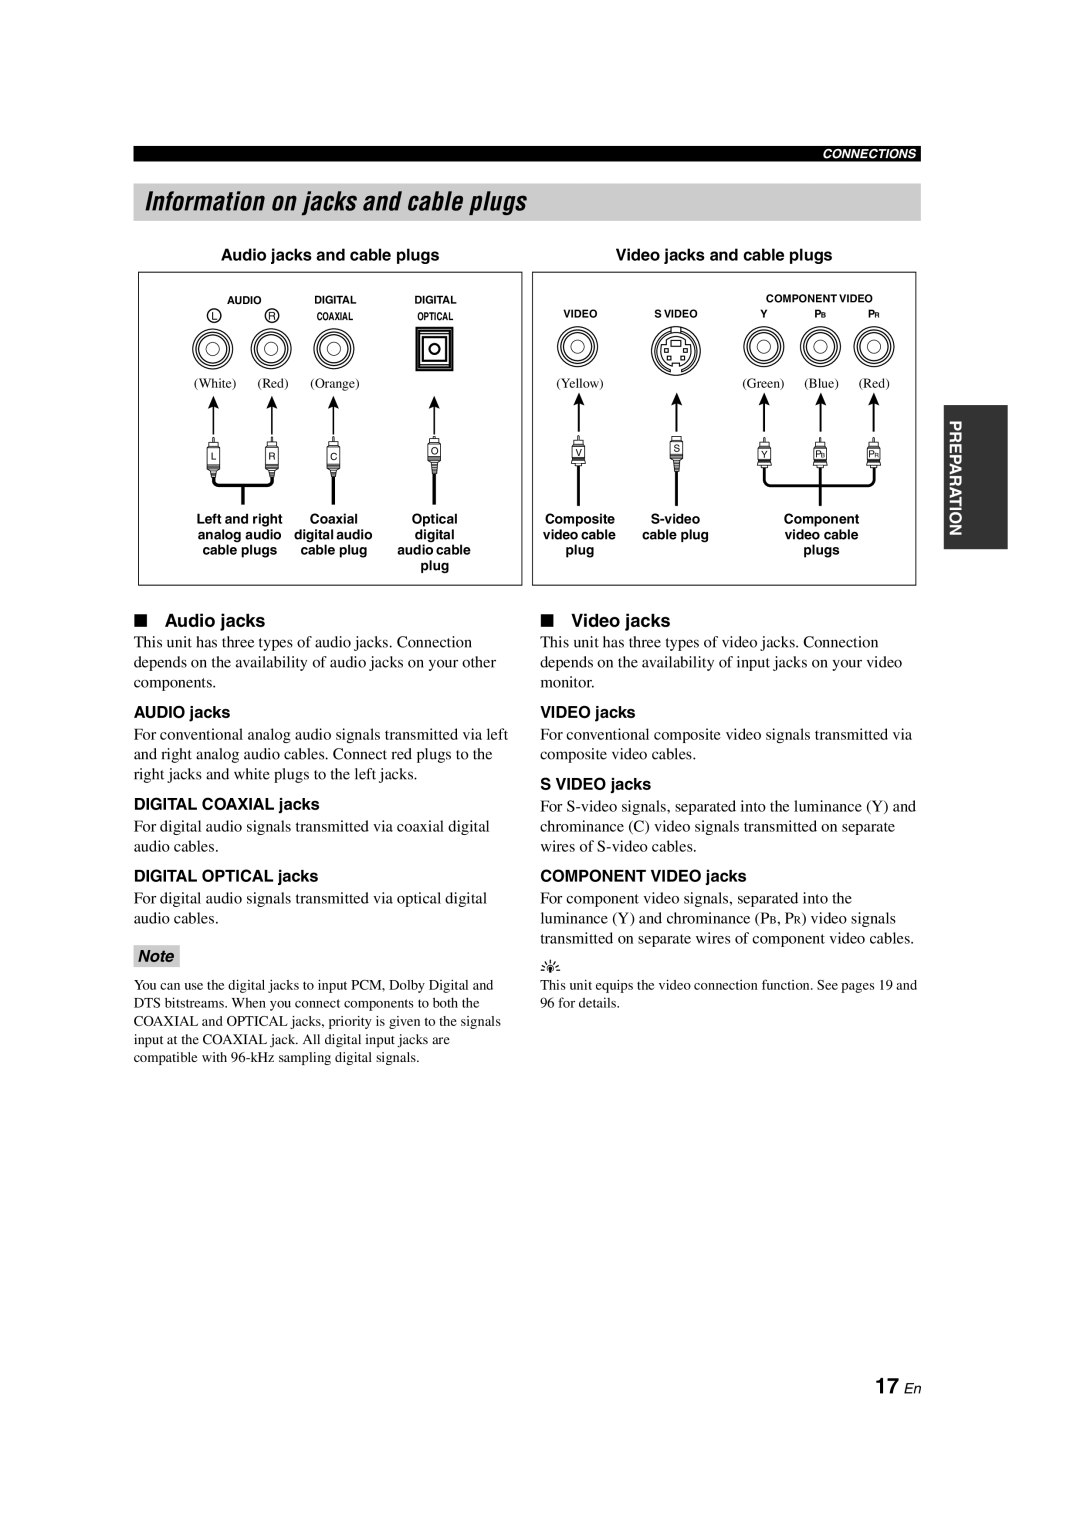 Yamaha HTR-6090 owner manual Information on jacks and cable plugs, 17 En, Audio jacks, Video jacks 